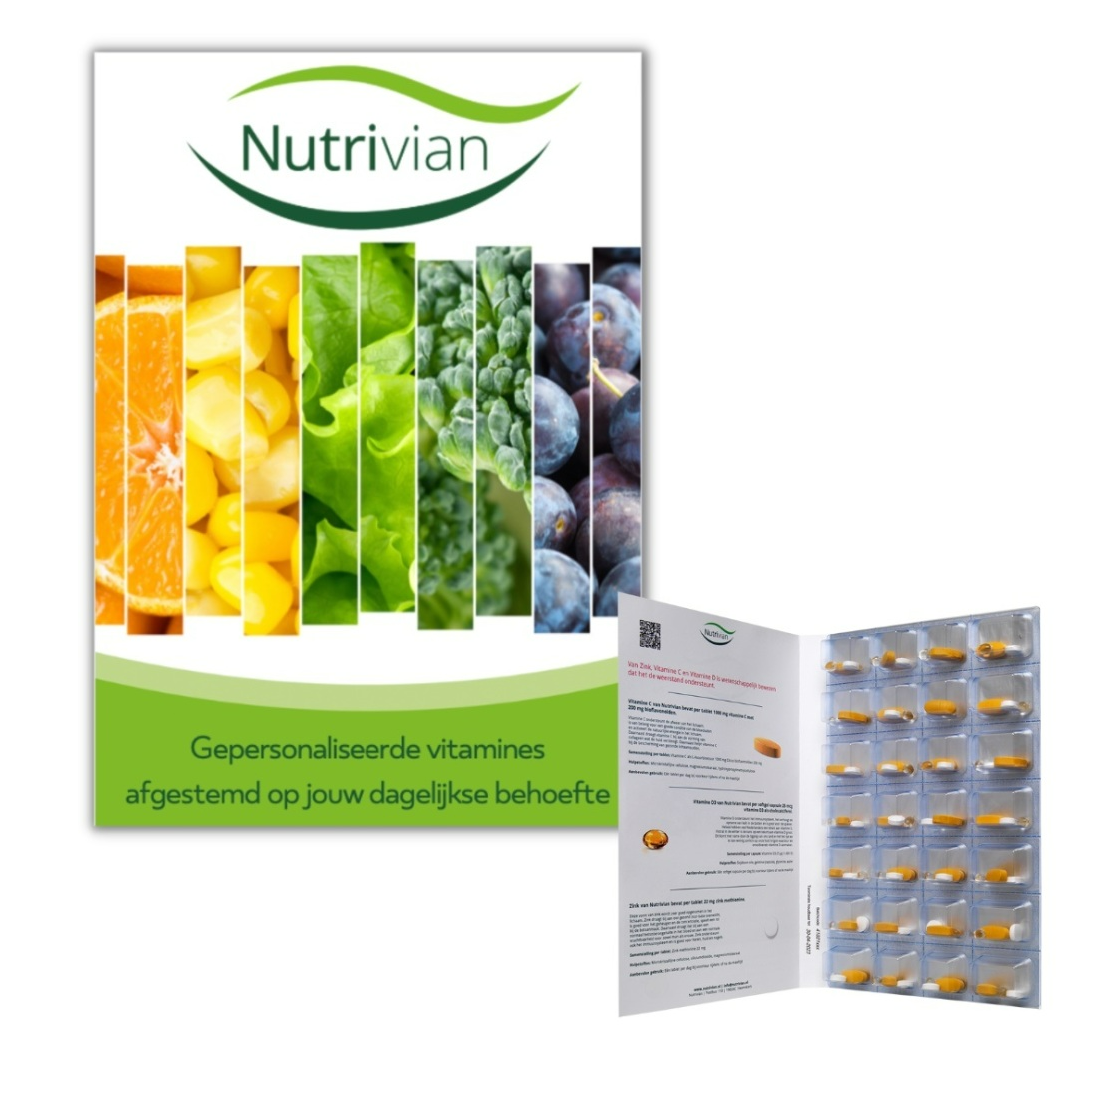 Nutrivian Gezond Weer Op Gewicht - 4 weekse kuur met gepersonaliseerde vitamines